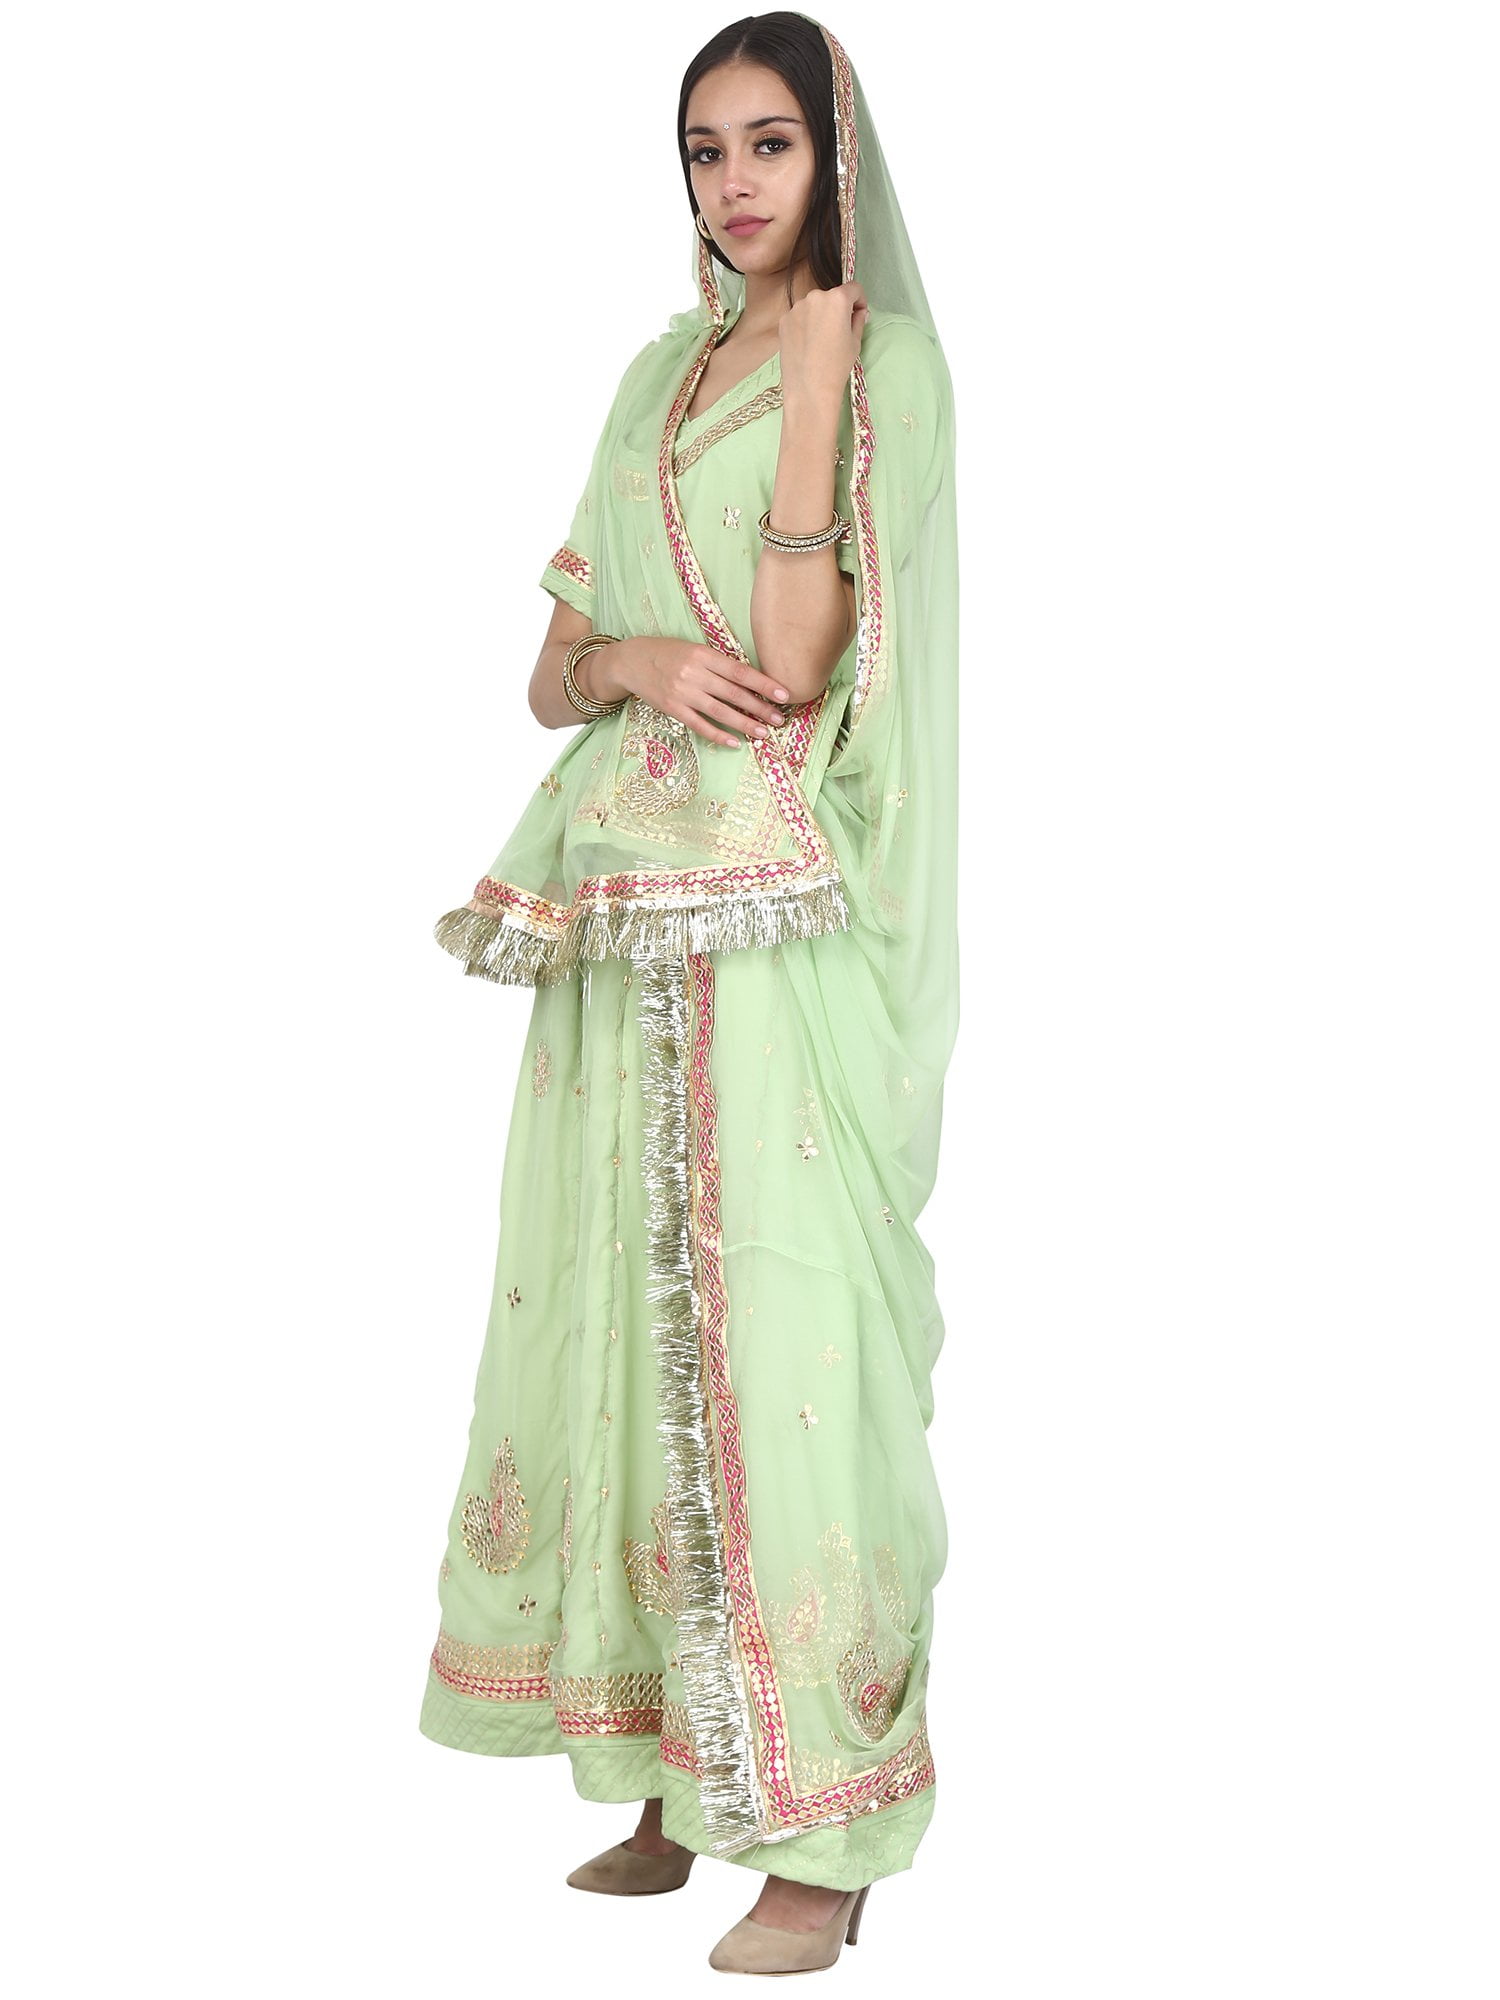 Pin by CHAVDA on Rajput posak | Rajputi dress, Rajasthani dress, Women  dresses classy